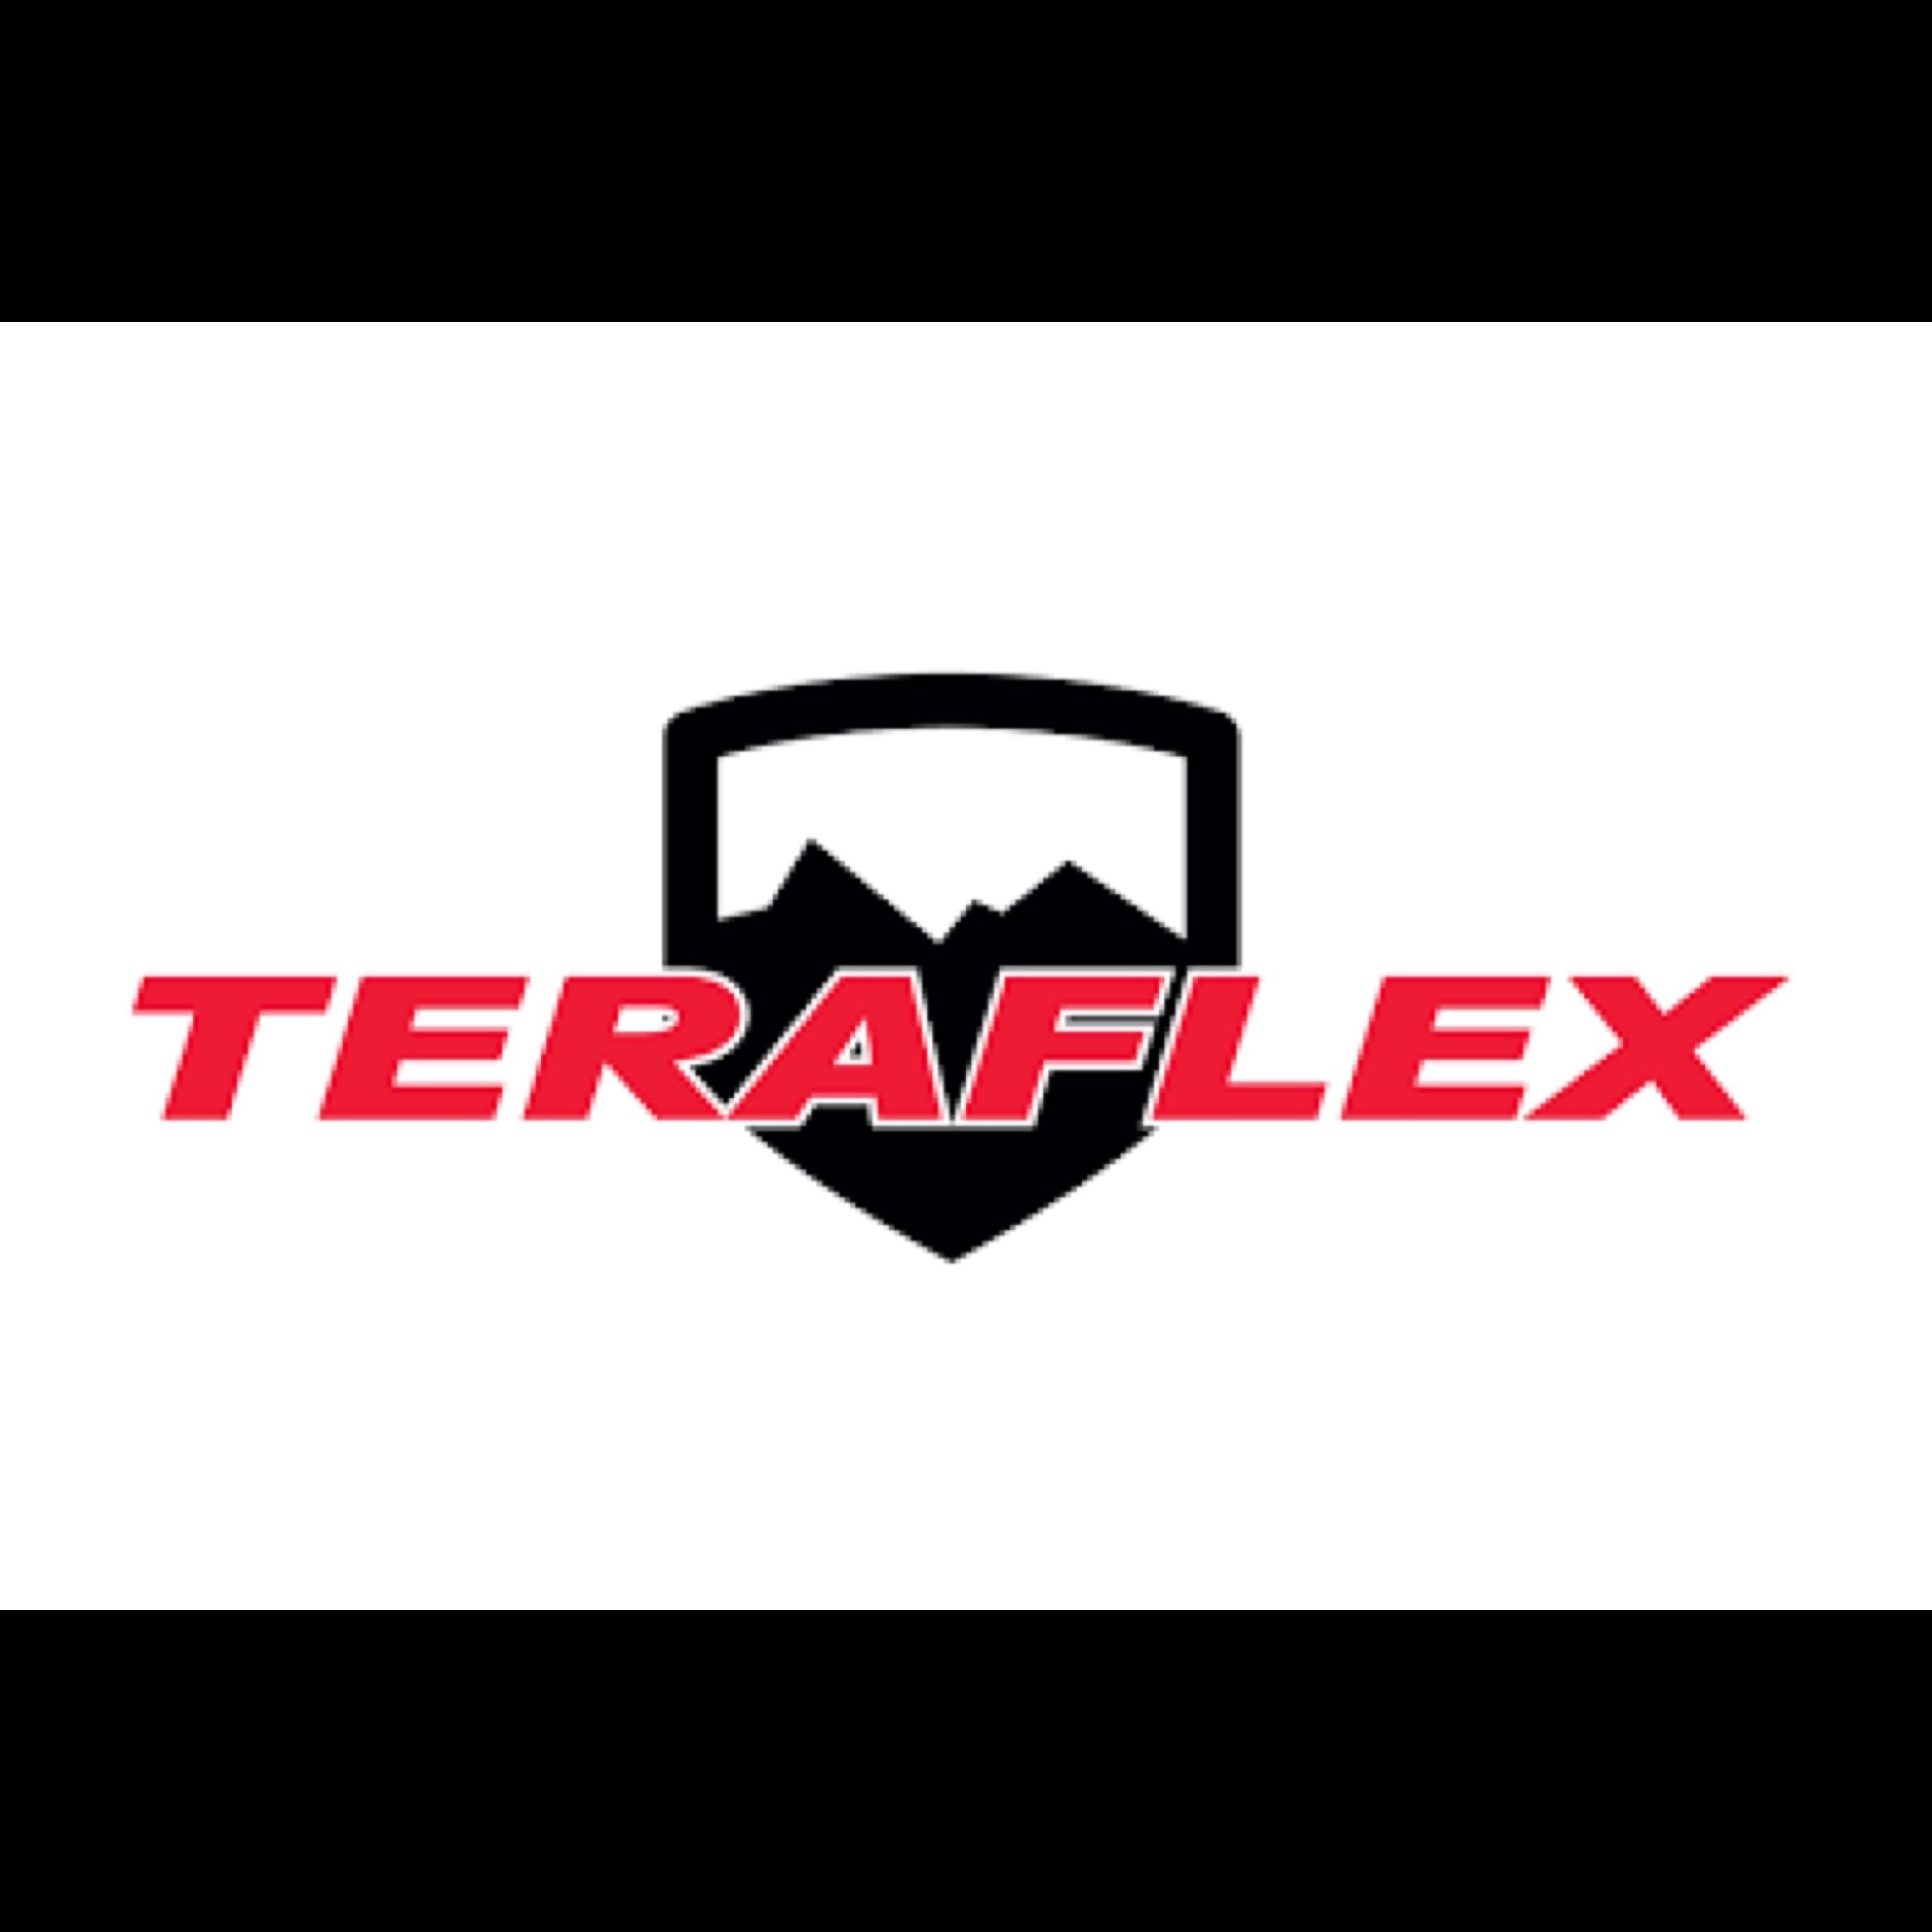 Teraflex logo with white background